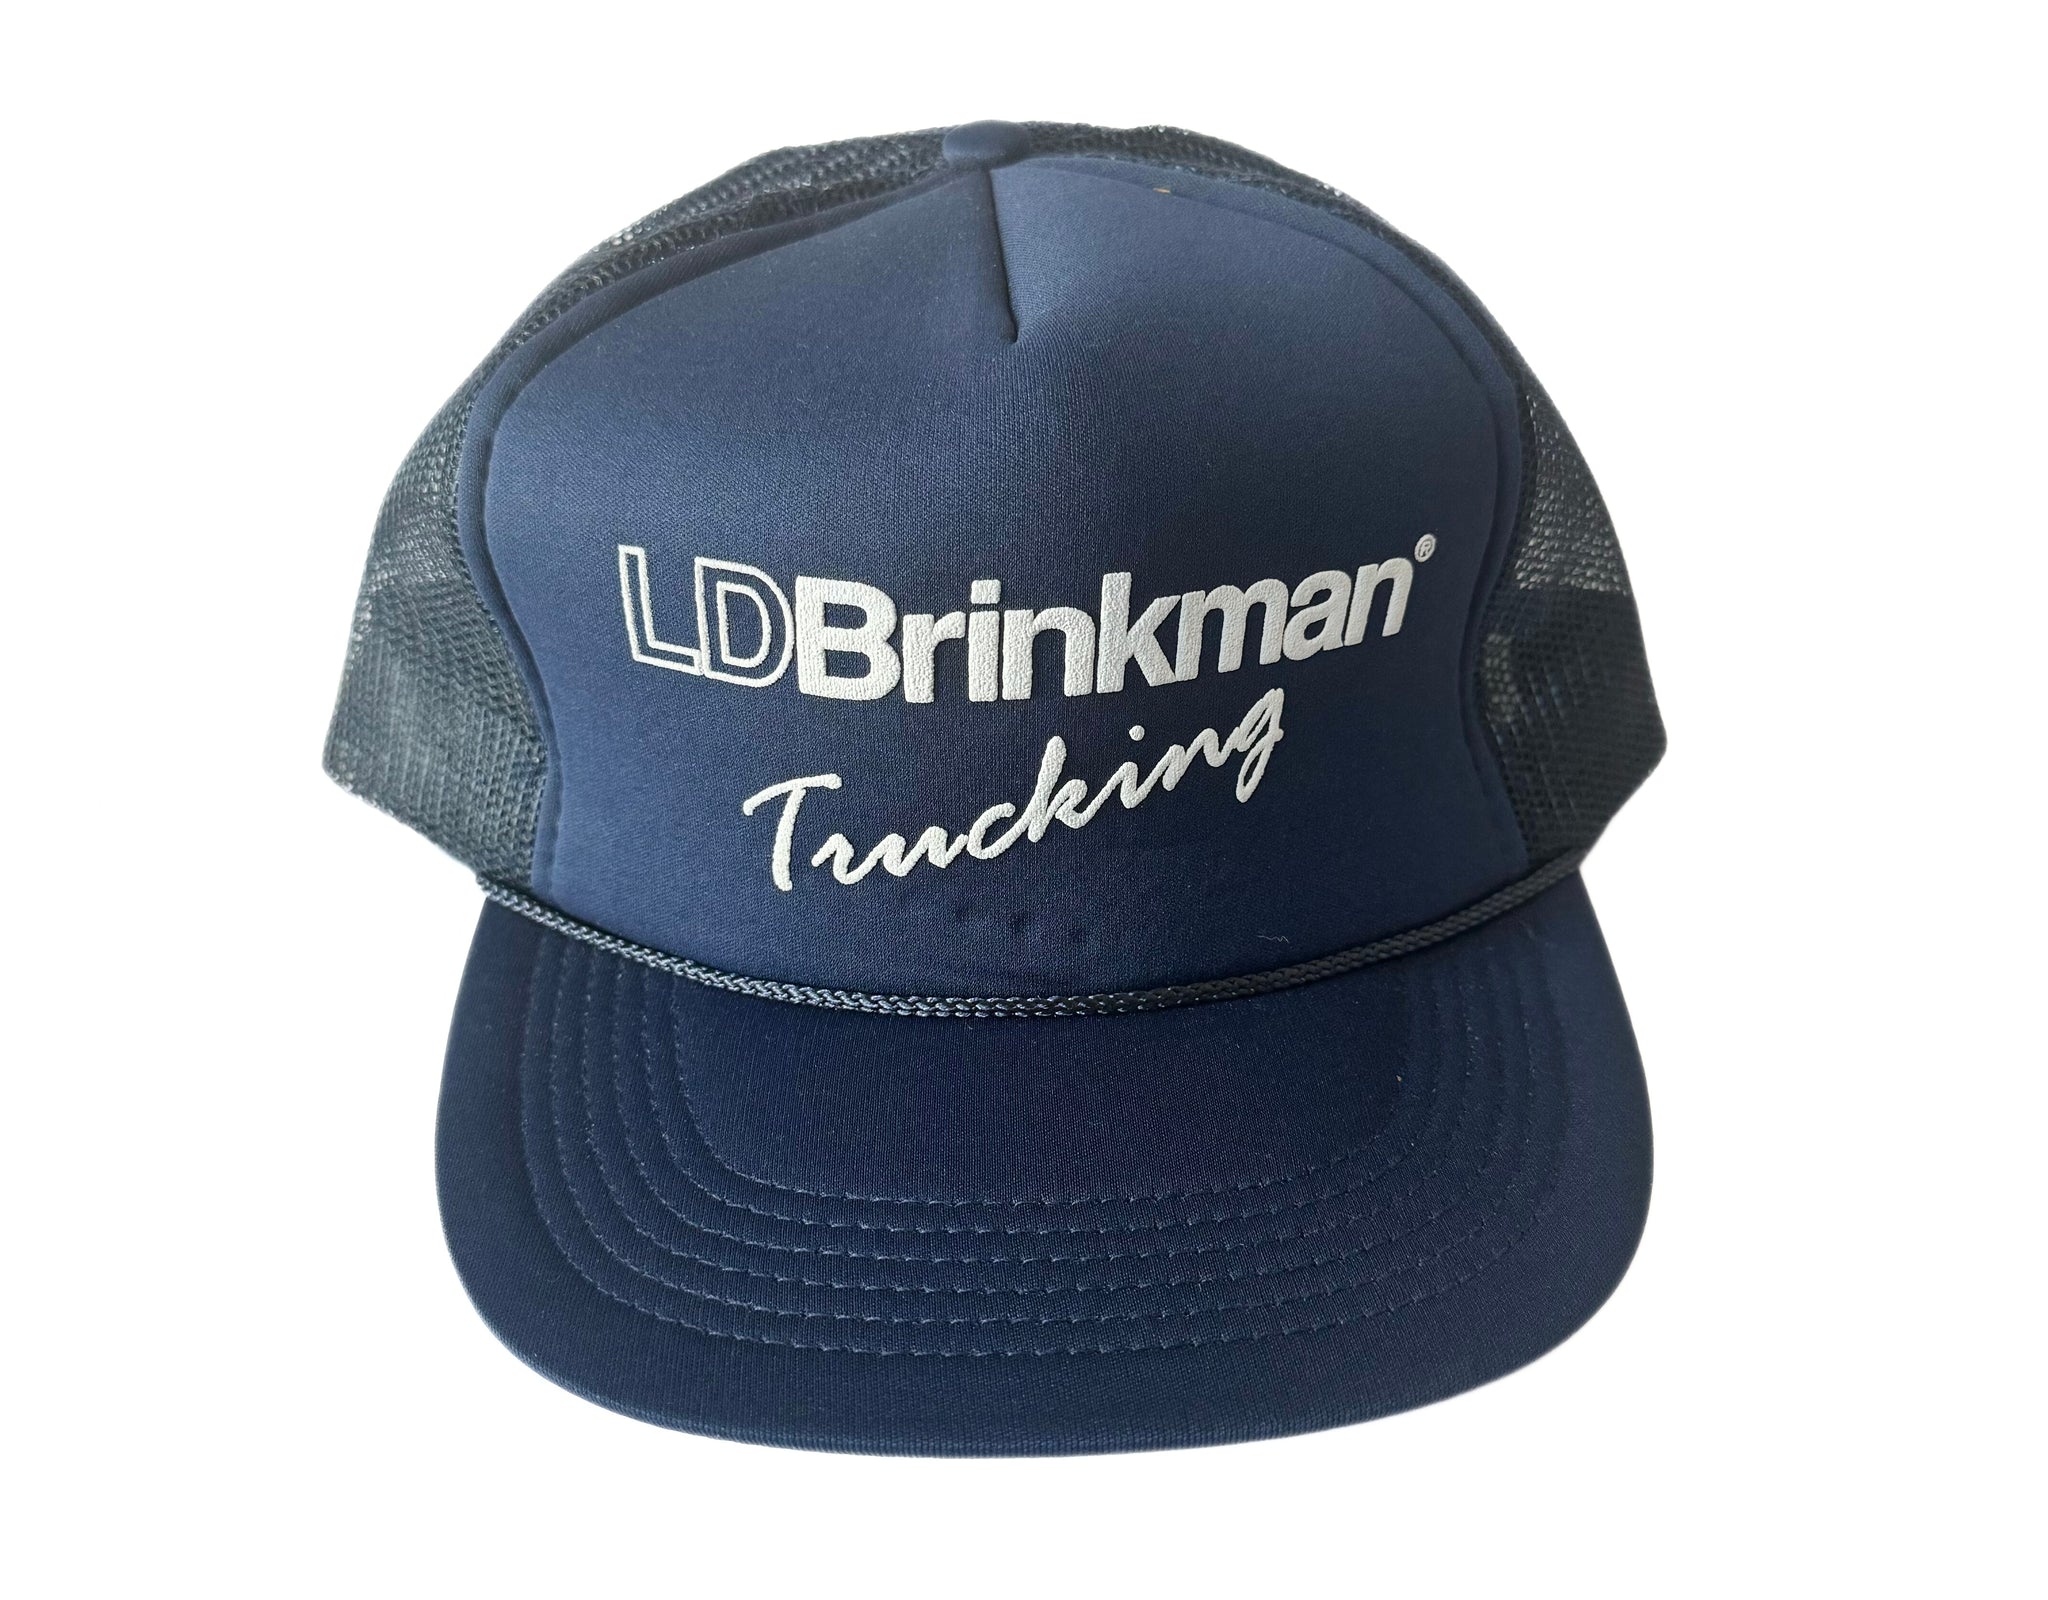 Vintage LD Brinkman Trucking Hat